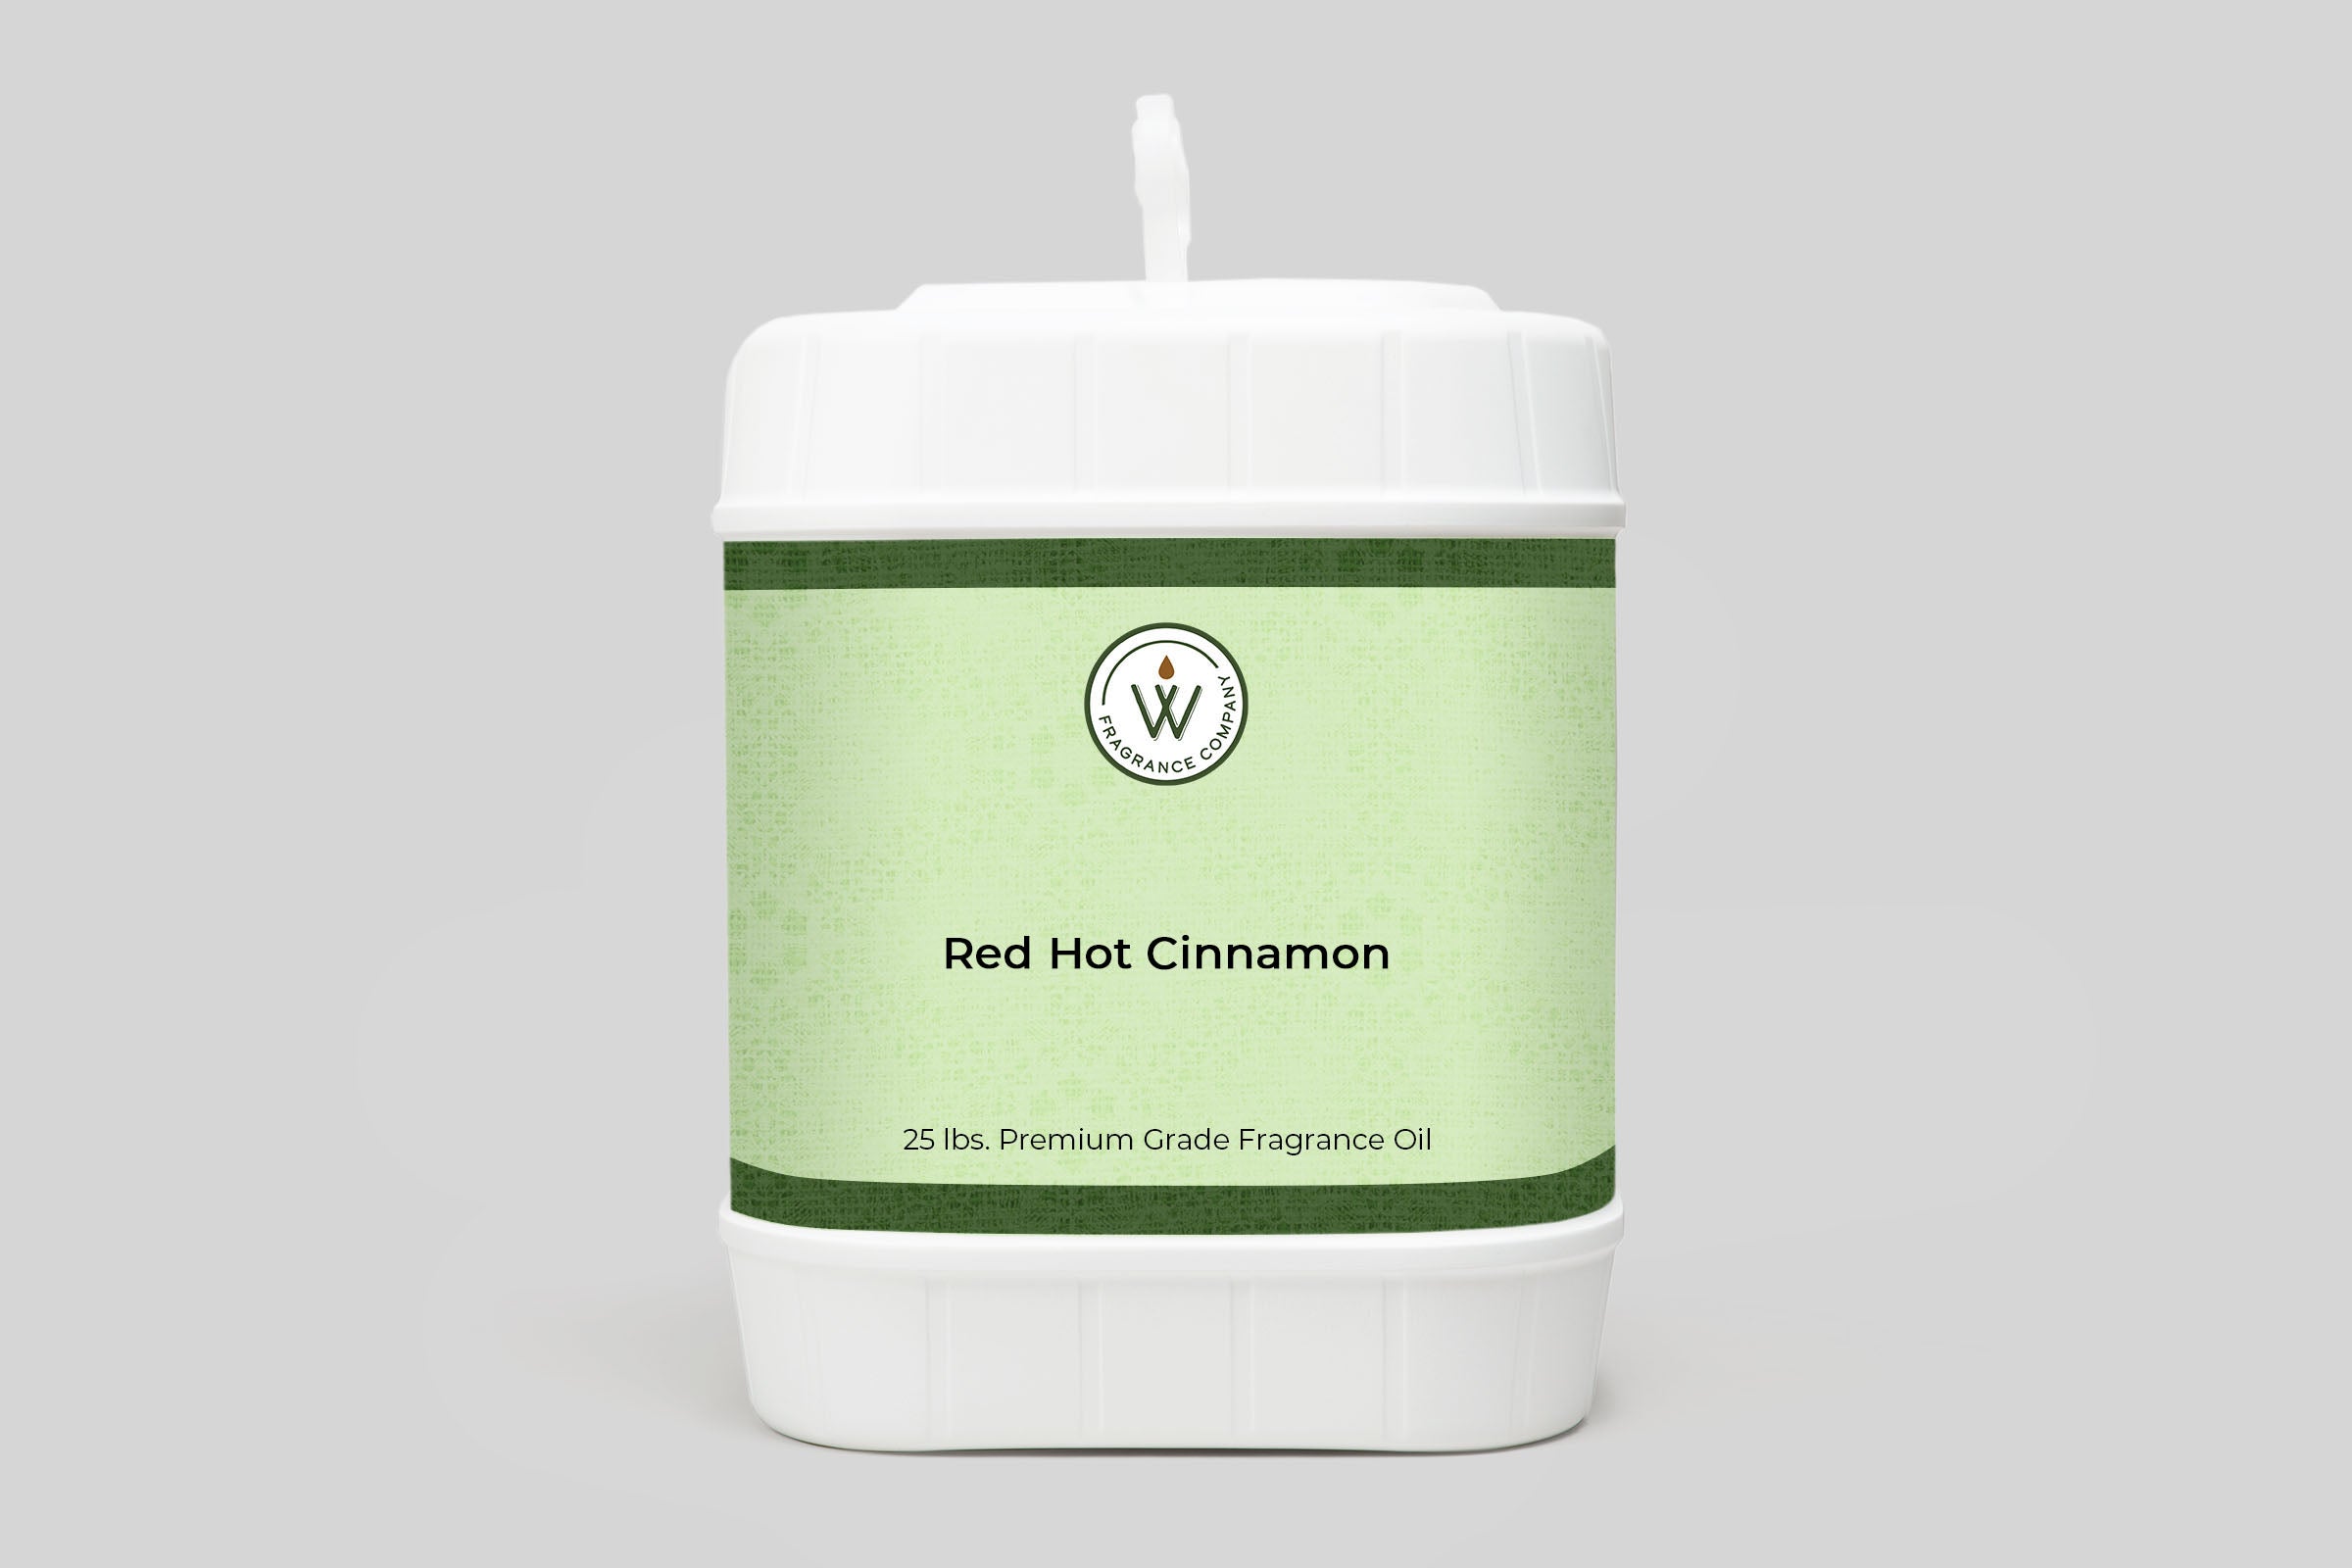 Red Hot Cinnamon Fragrance Oil